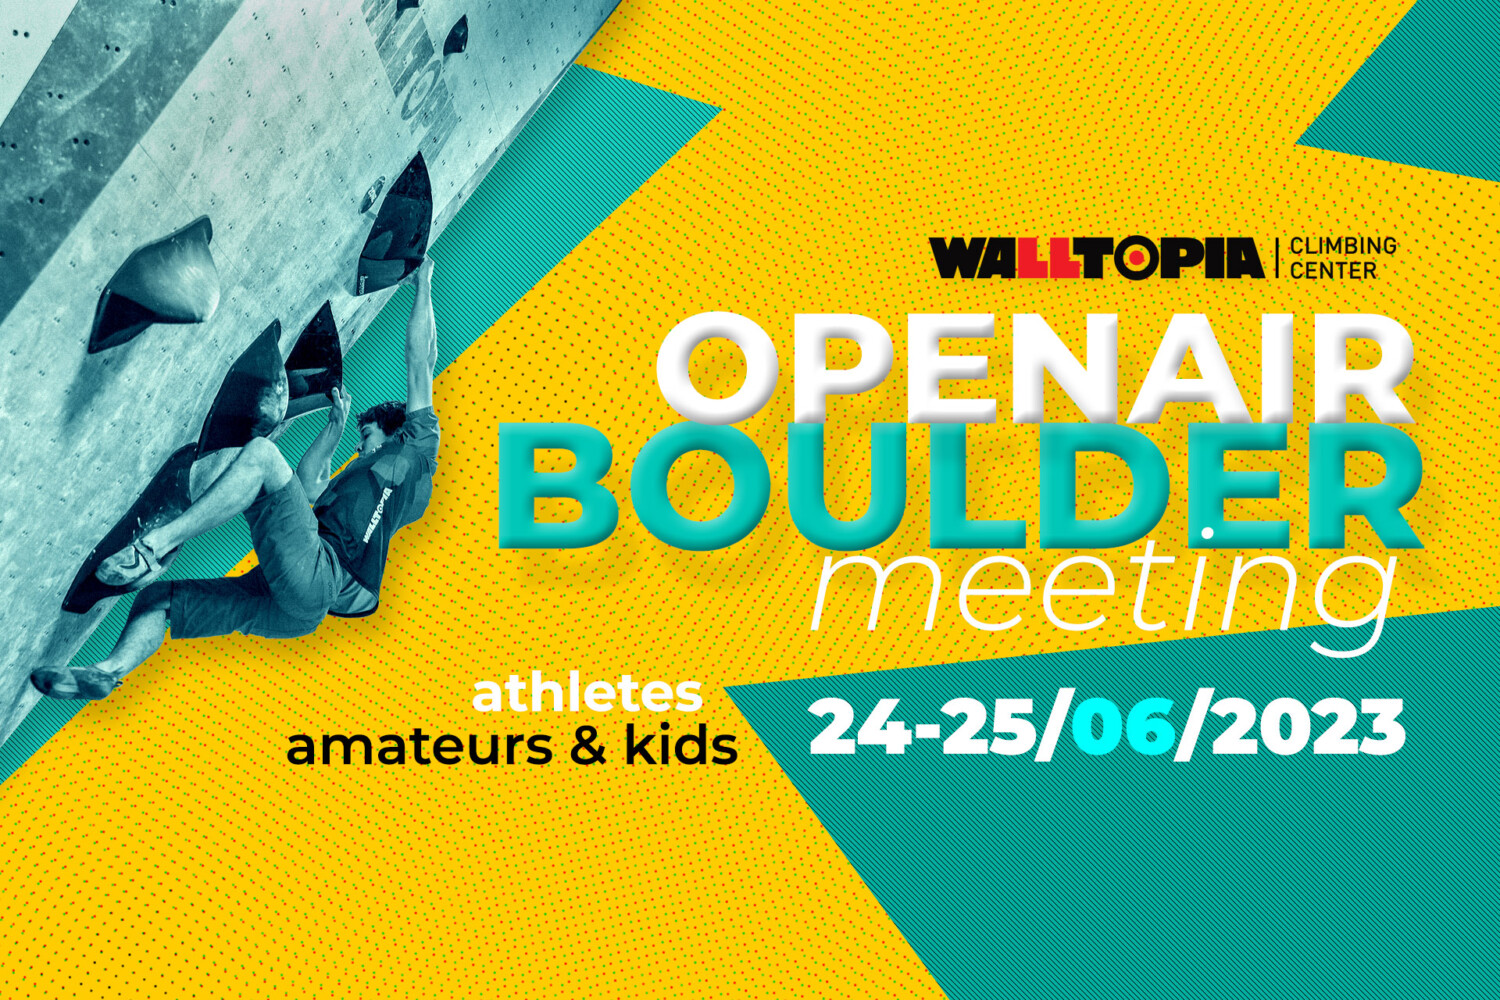 OpenAir Boulder Meetingв Walltopia Climbing Center